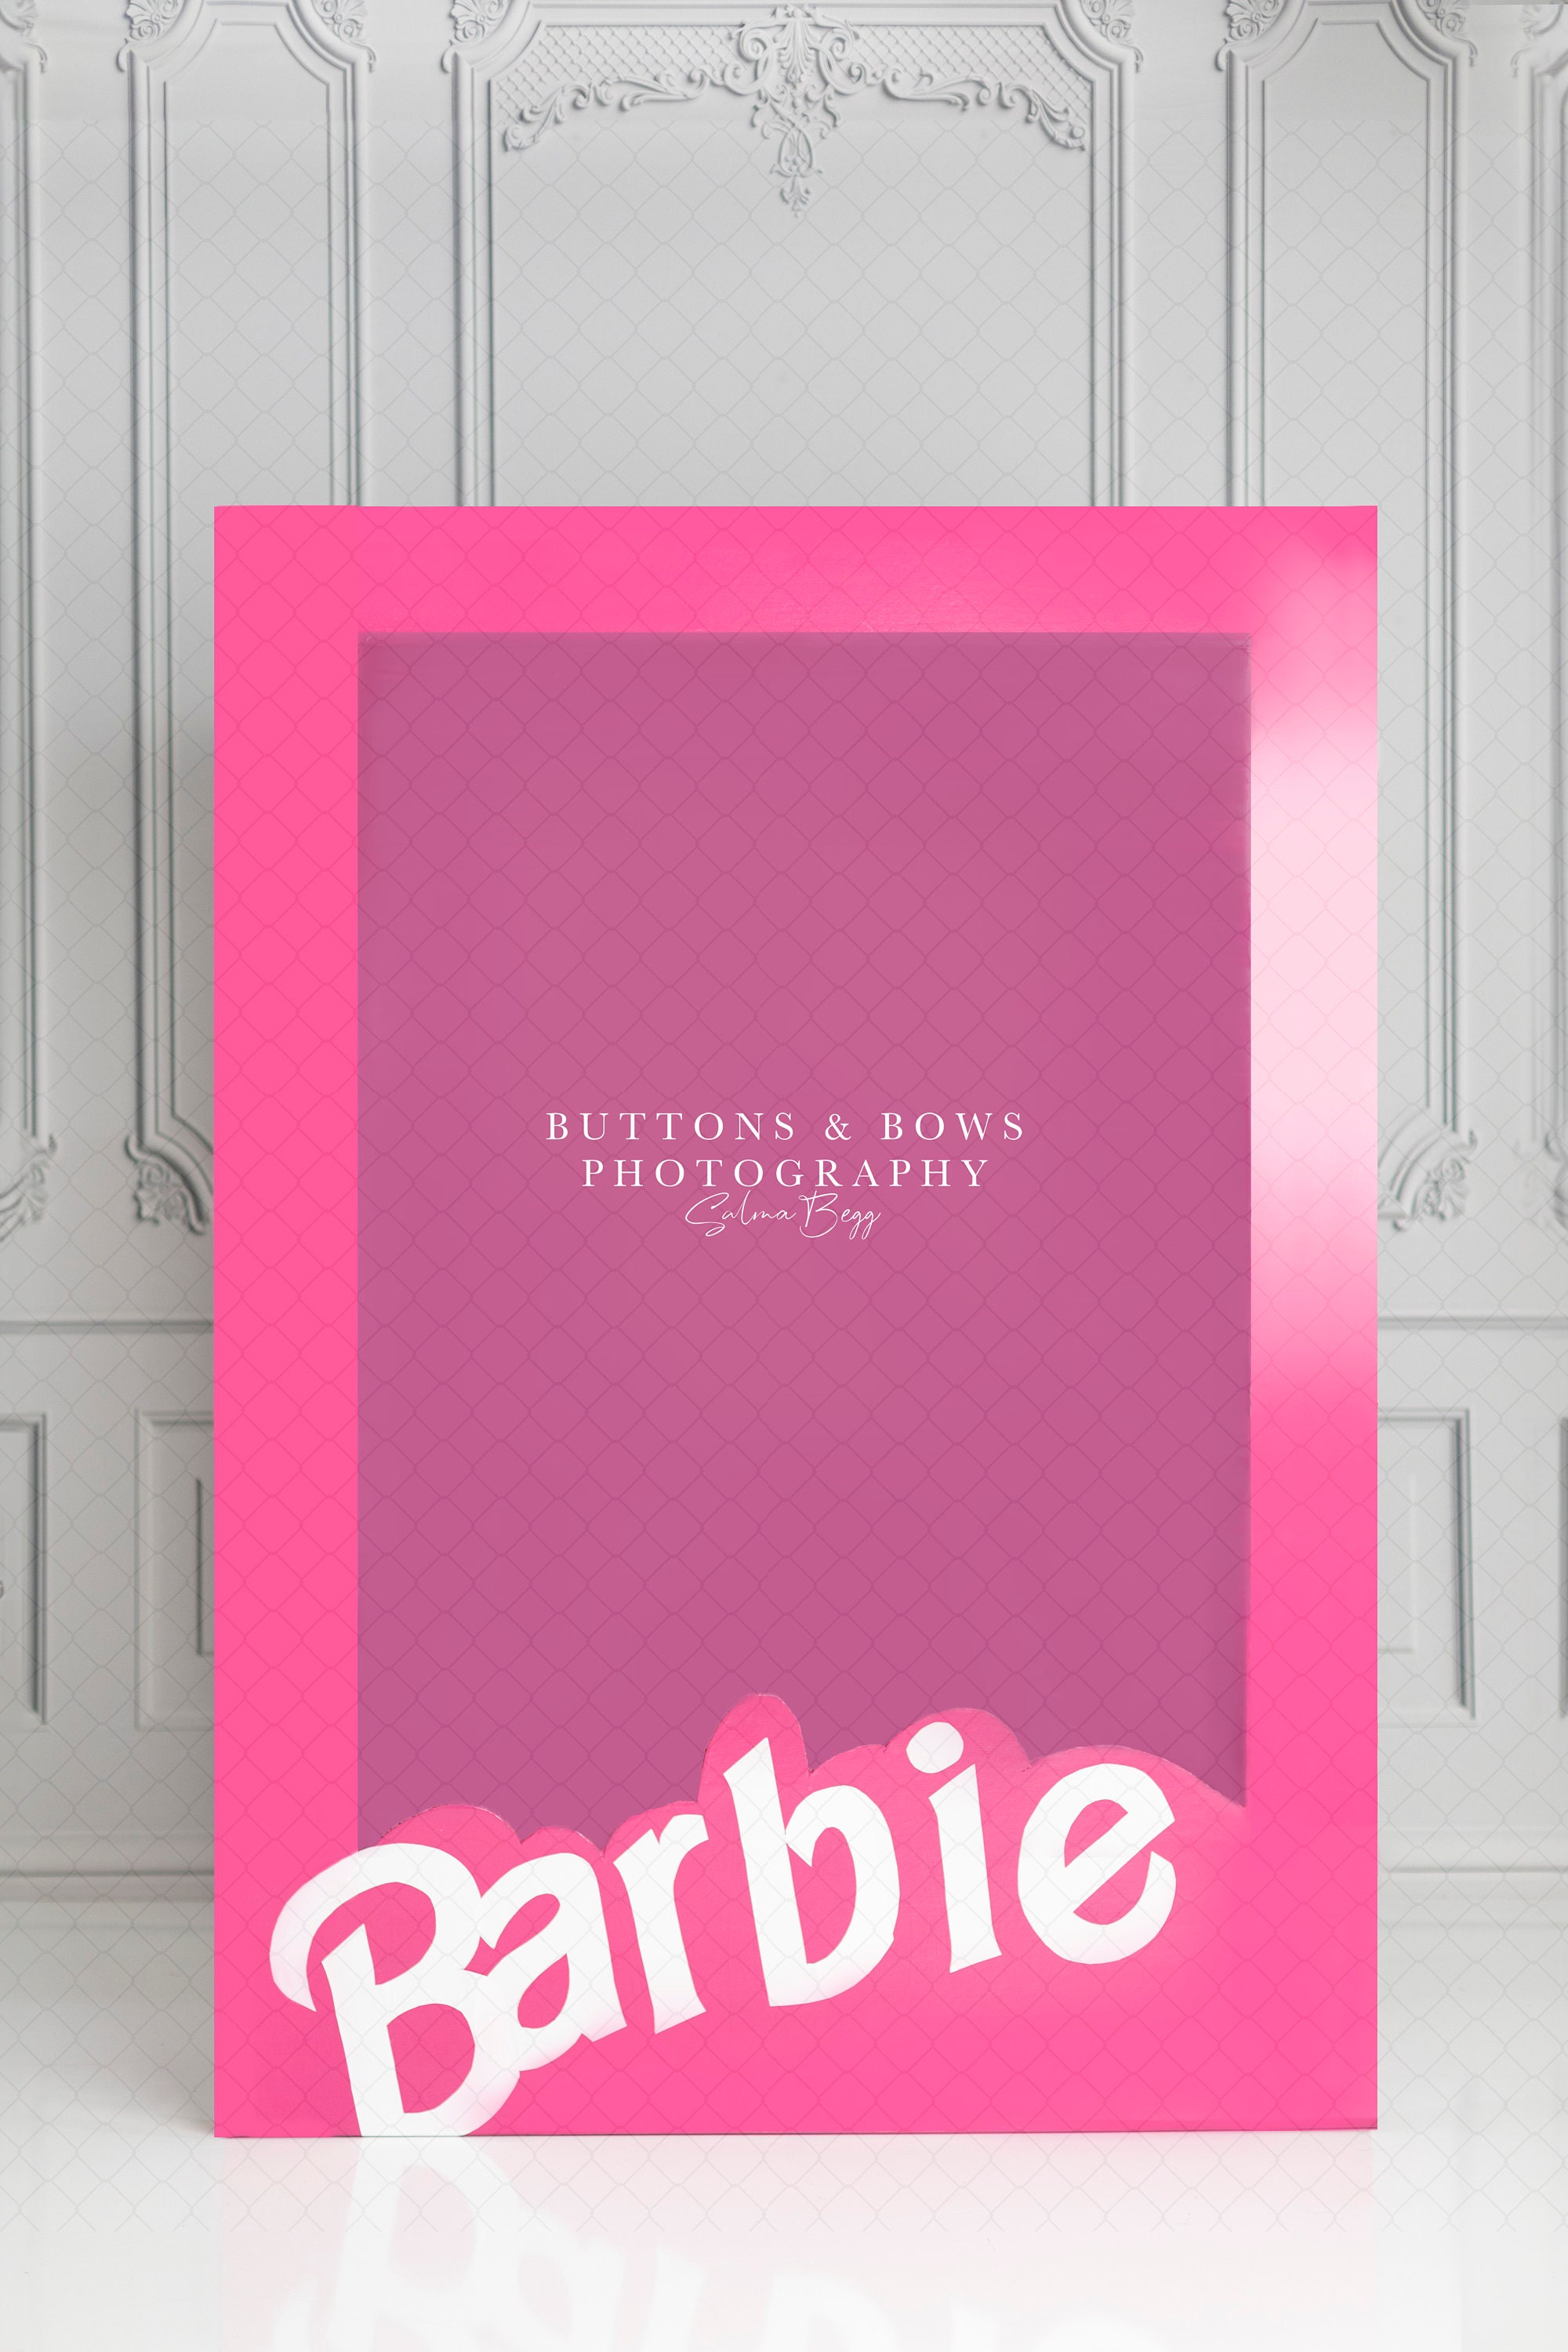 Barbie box background